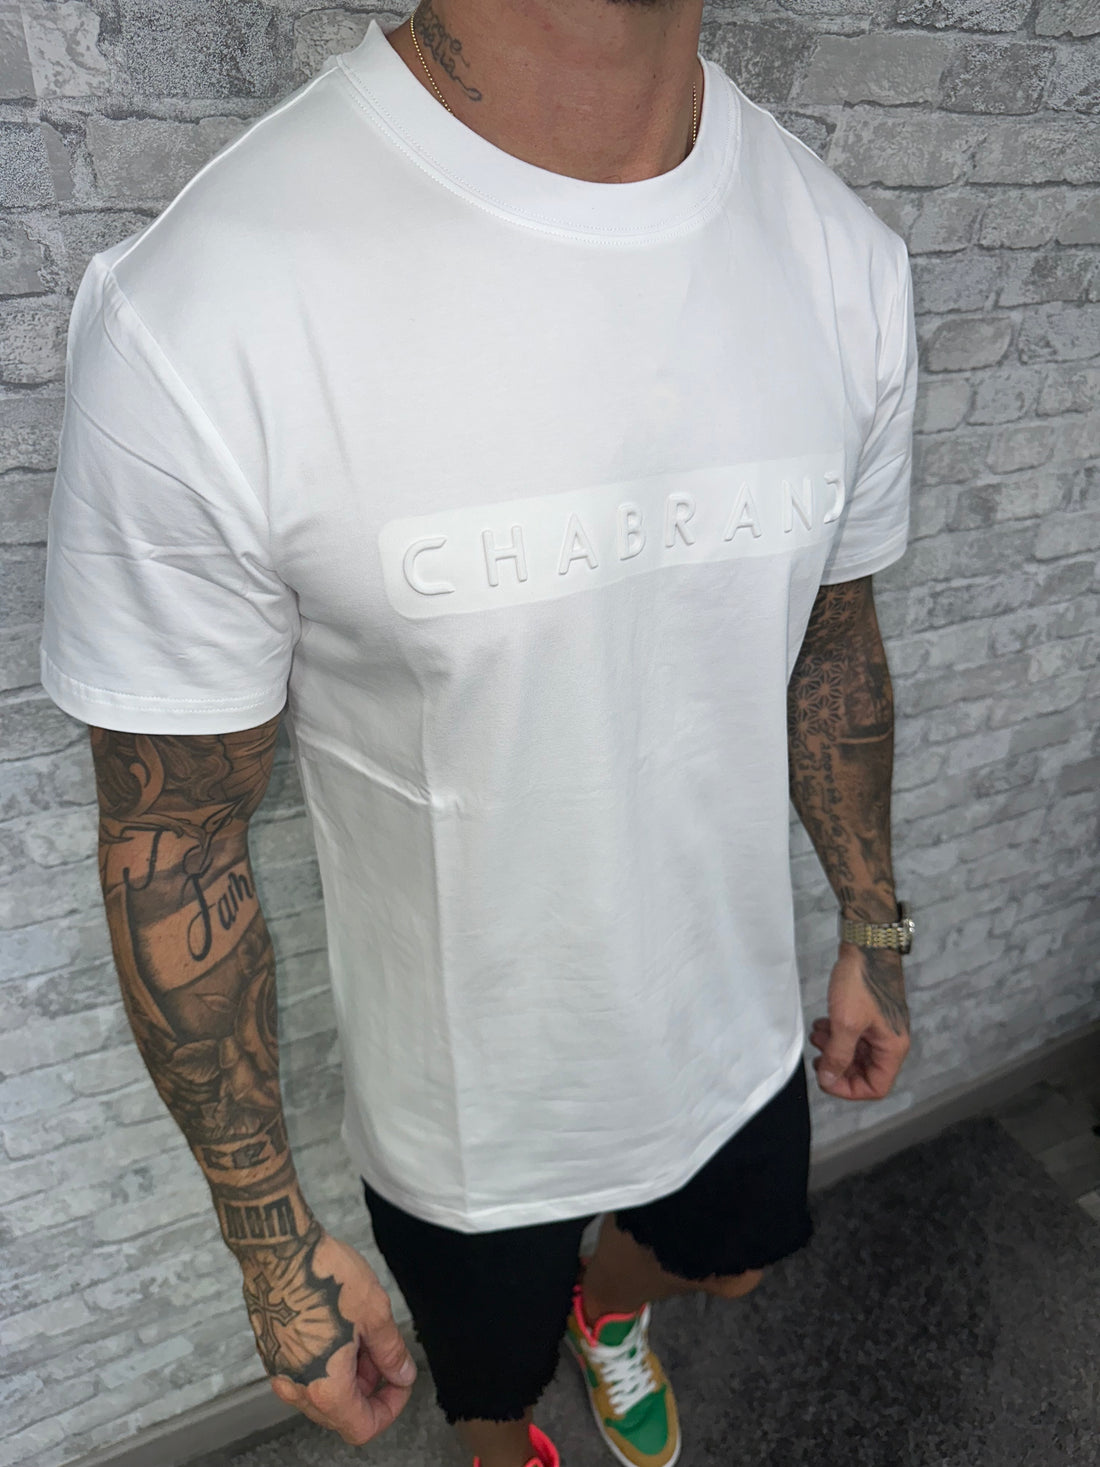 CHABRAND - Tee-shirt blanc relief